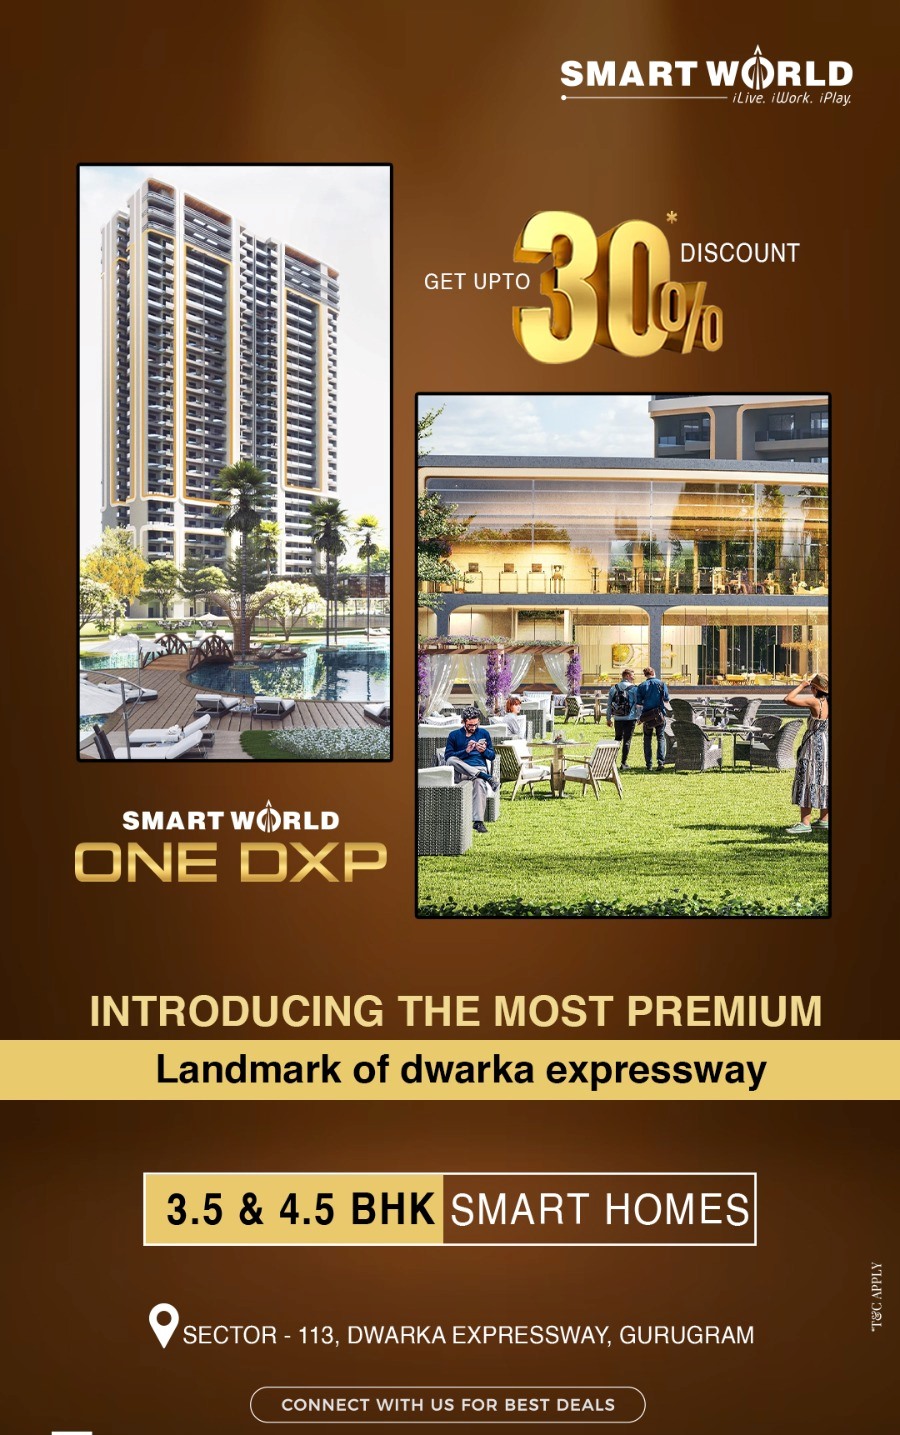 Smart World One DXP Introducing the most premium landmark of Dwarka Expressway, Gurgaon Update